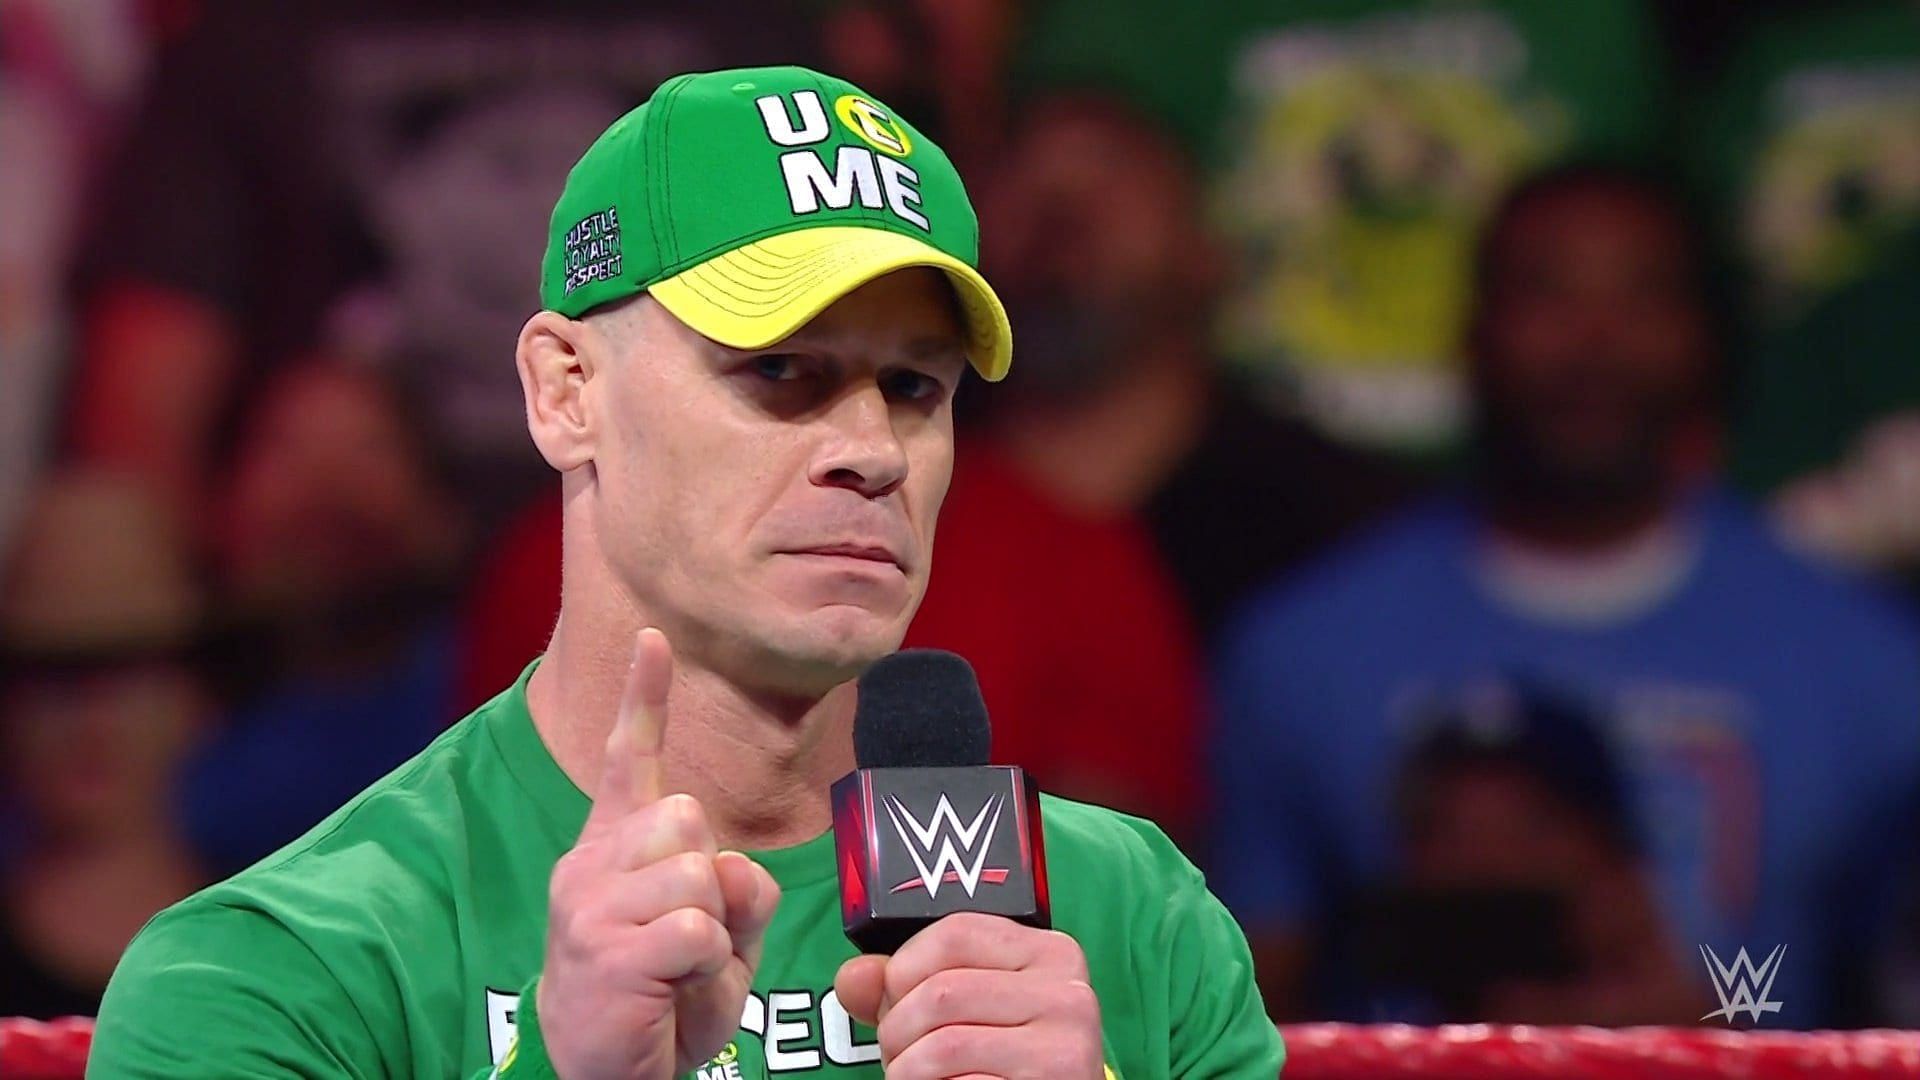 John Cena teases feud with former WWE Champion ahead of RAW return